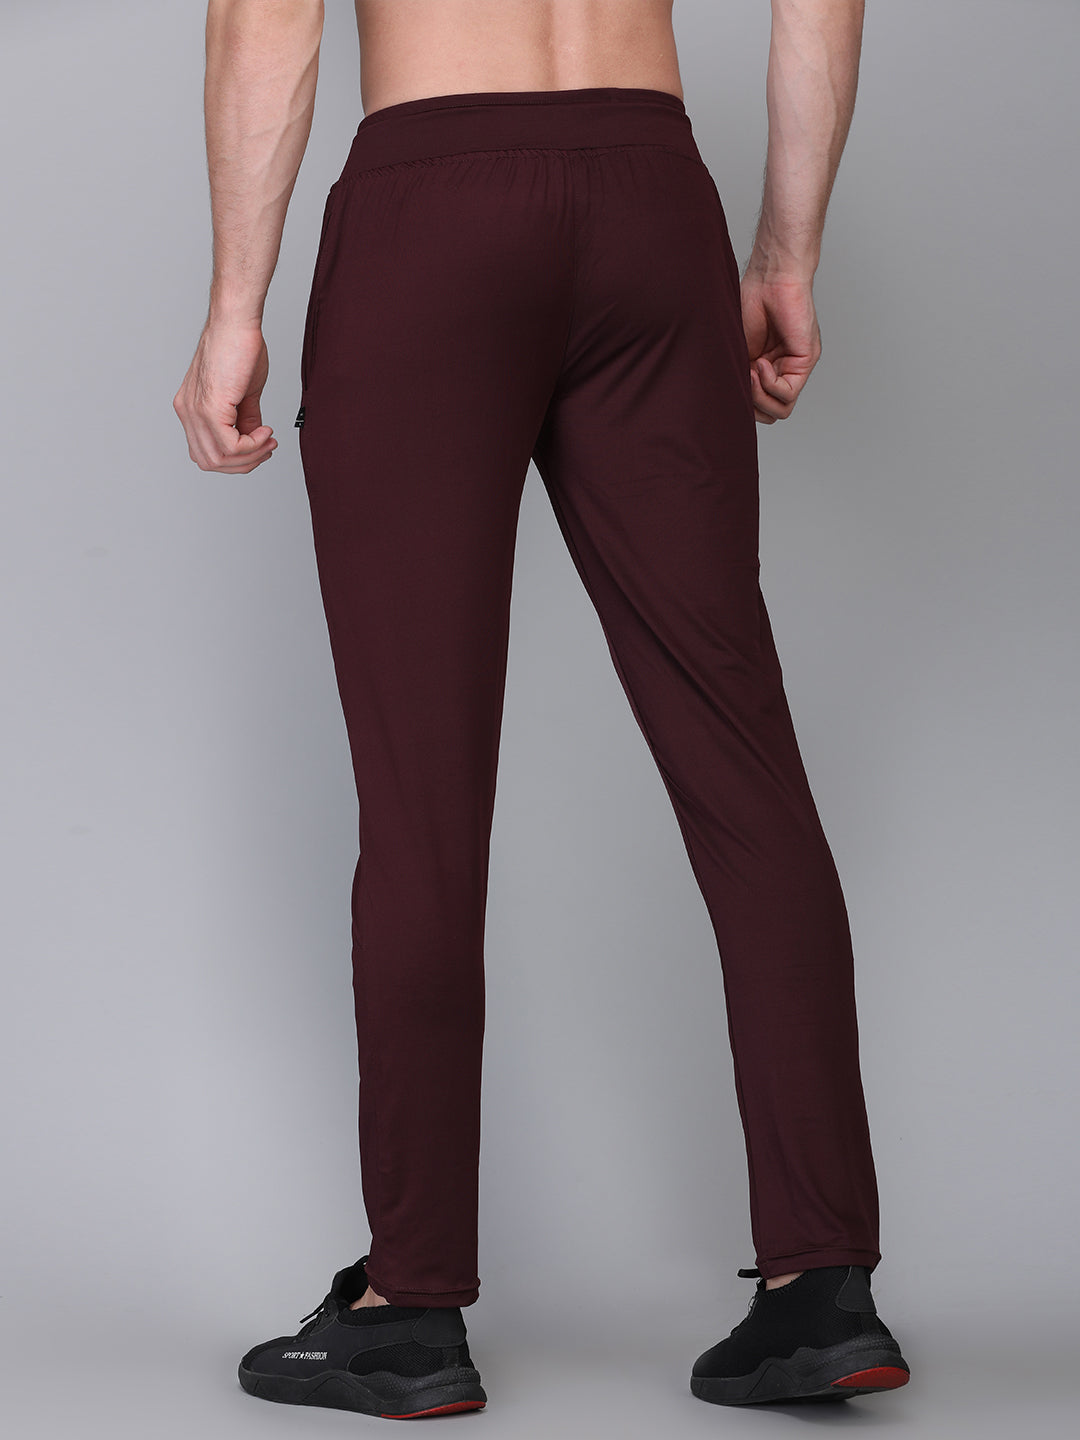 Fabulous Dark Grey 4Way Lycra Solid Regular Track Pants For Men